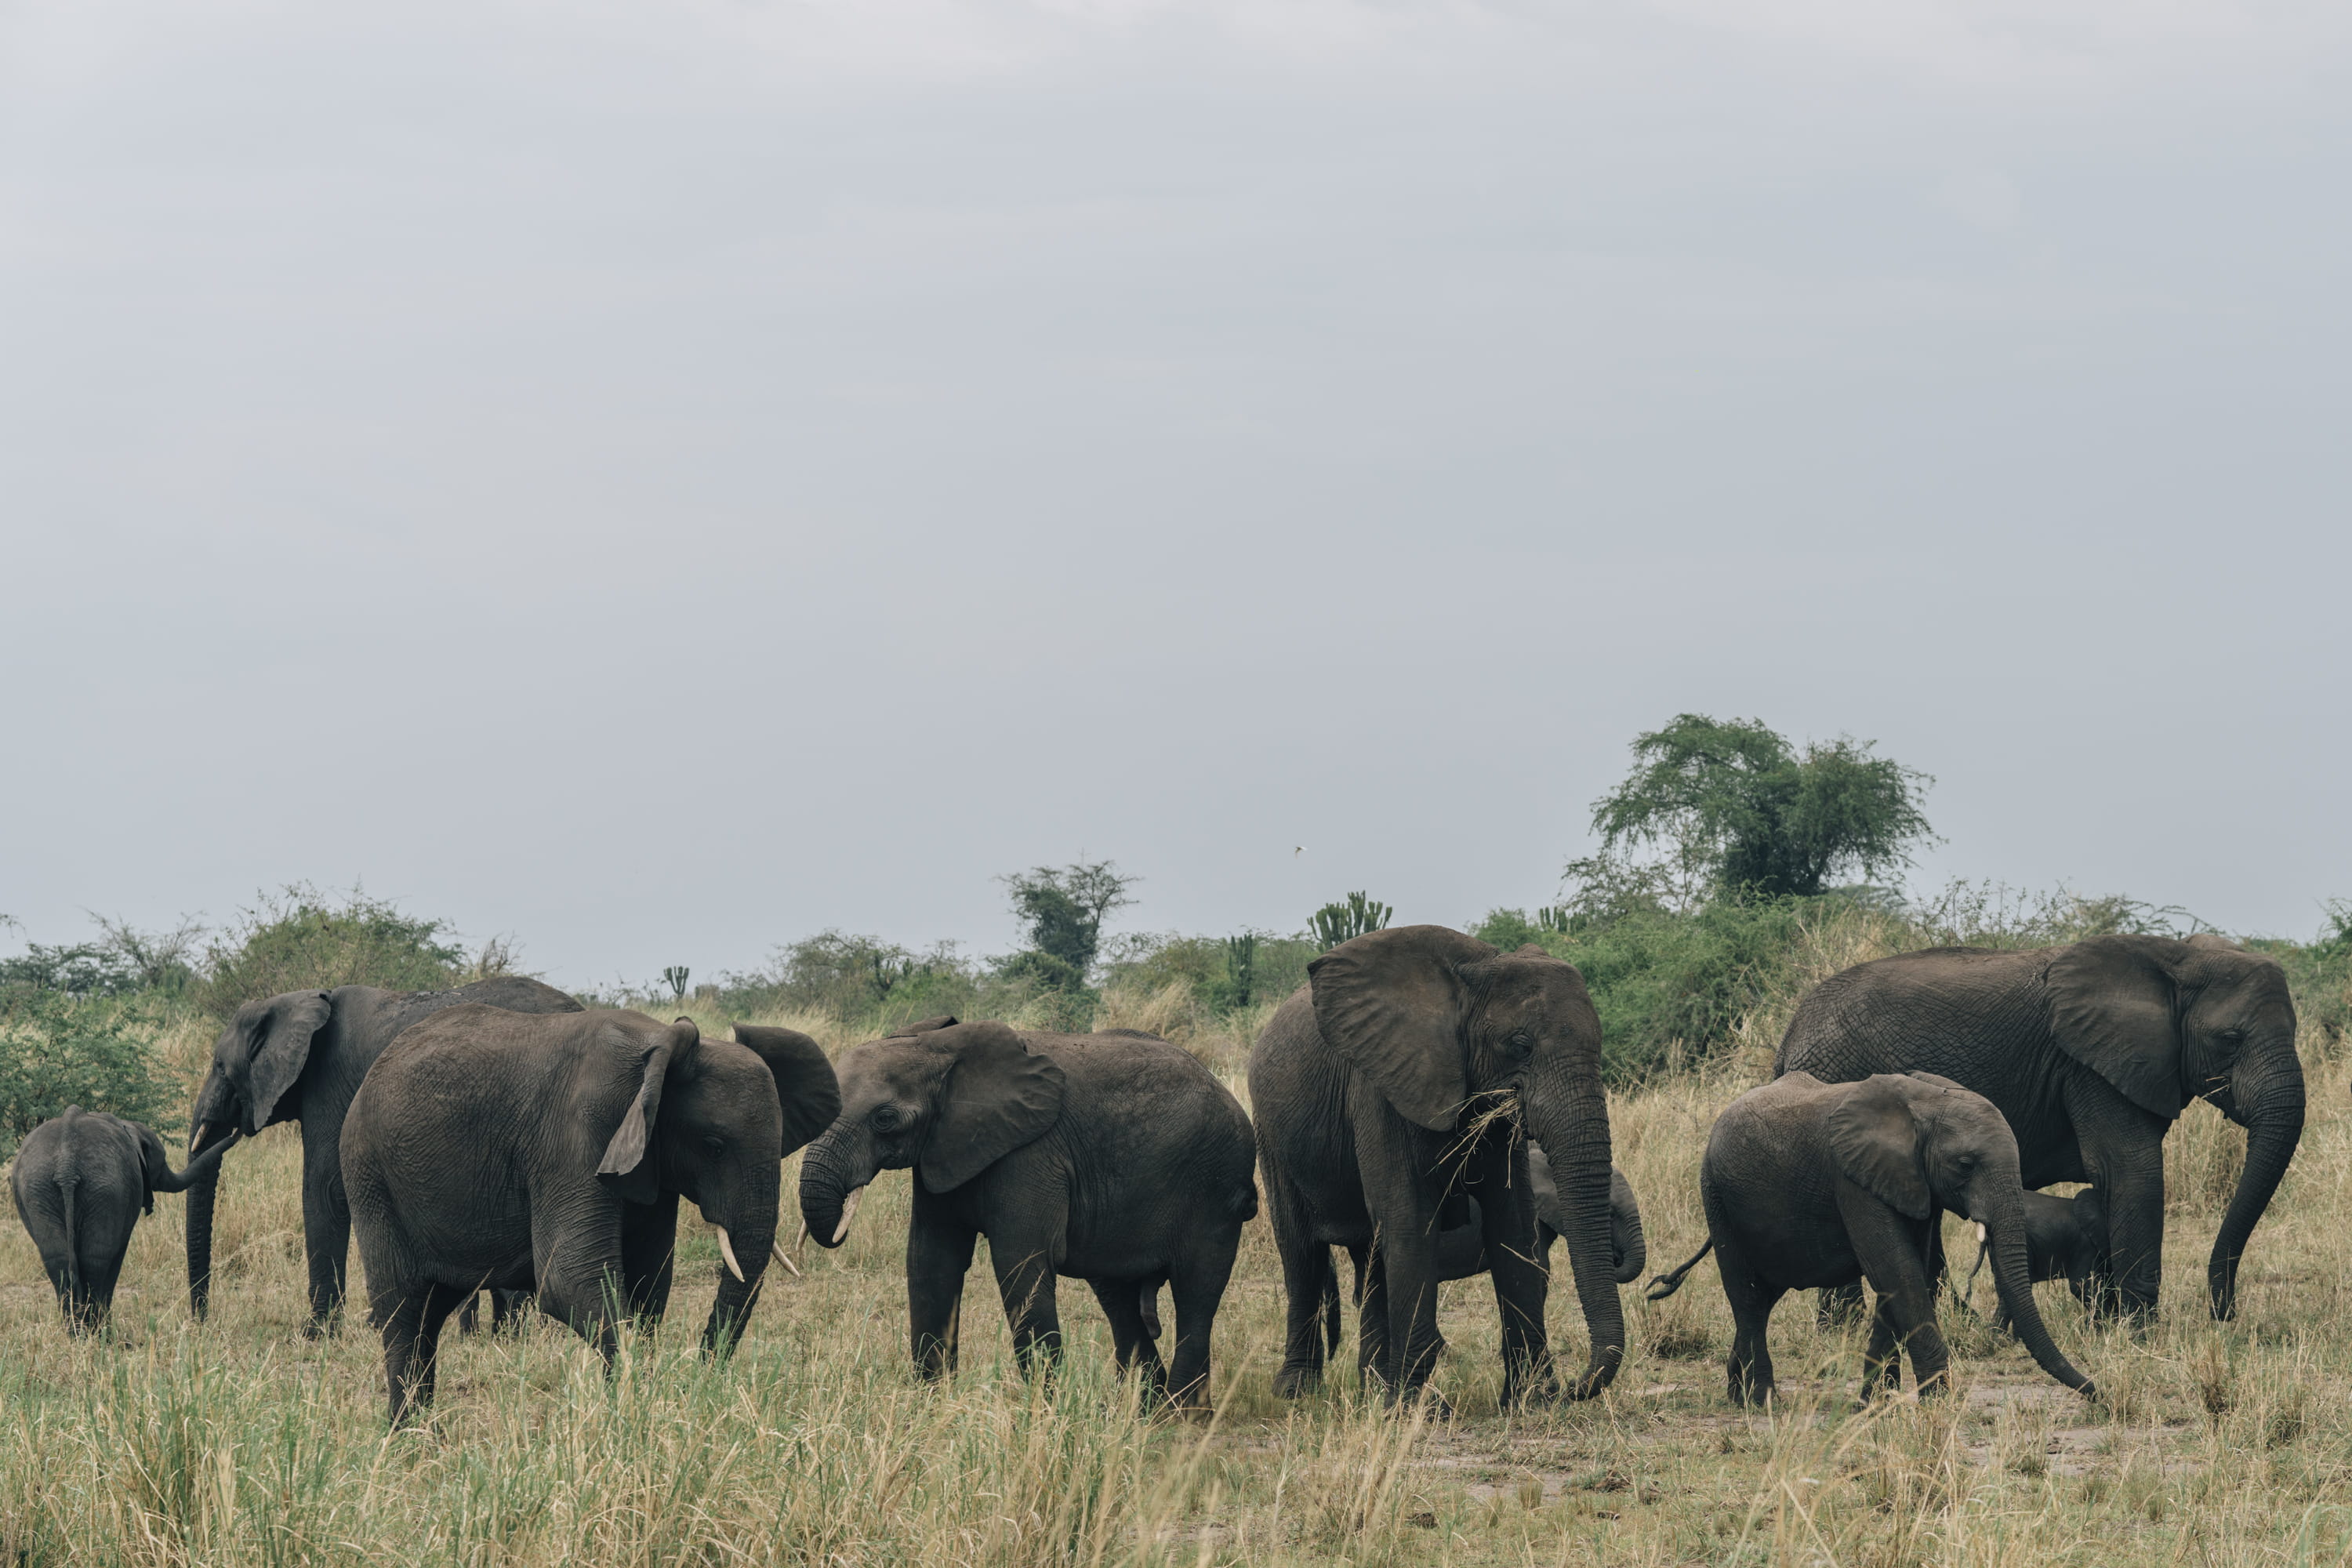 group of elephants, wildlife, mammal, animal, outdoors, field